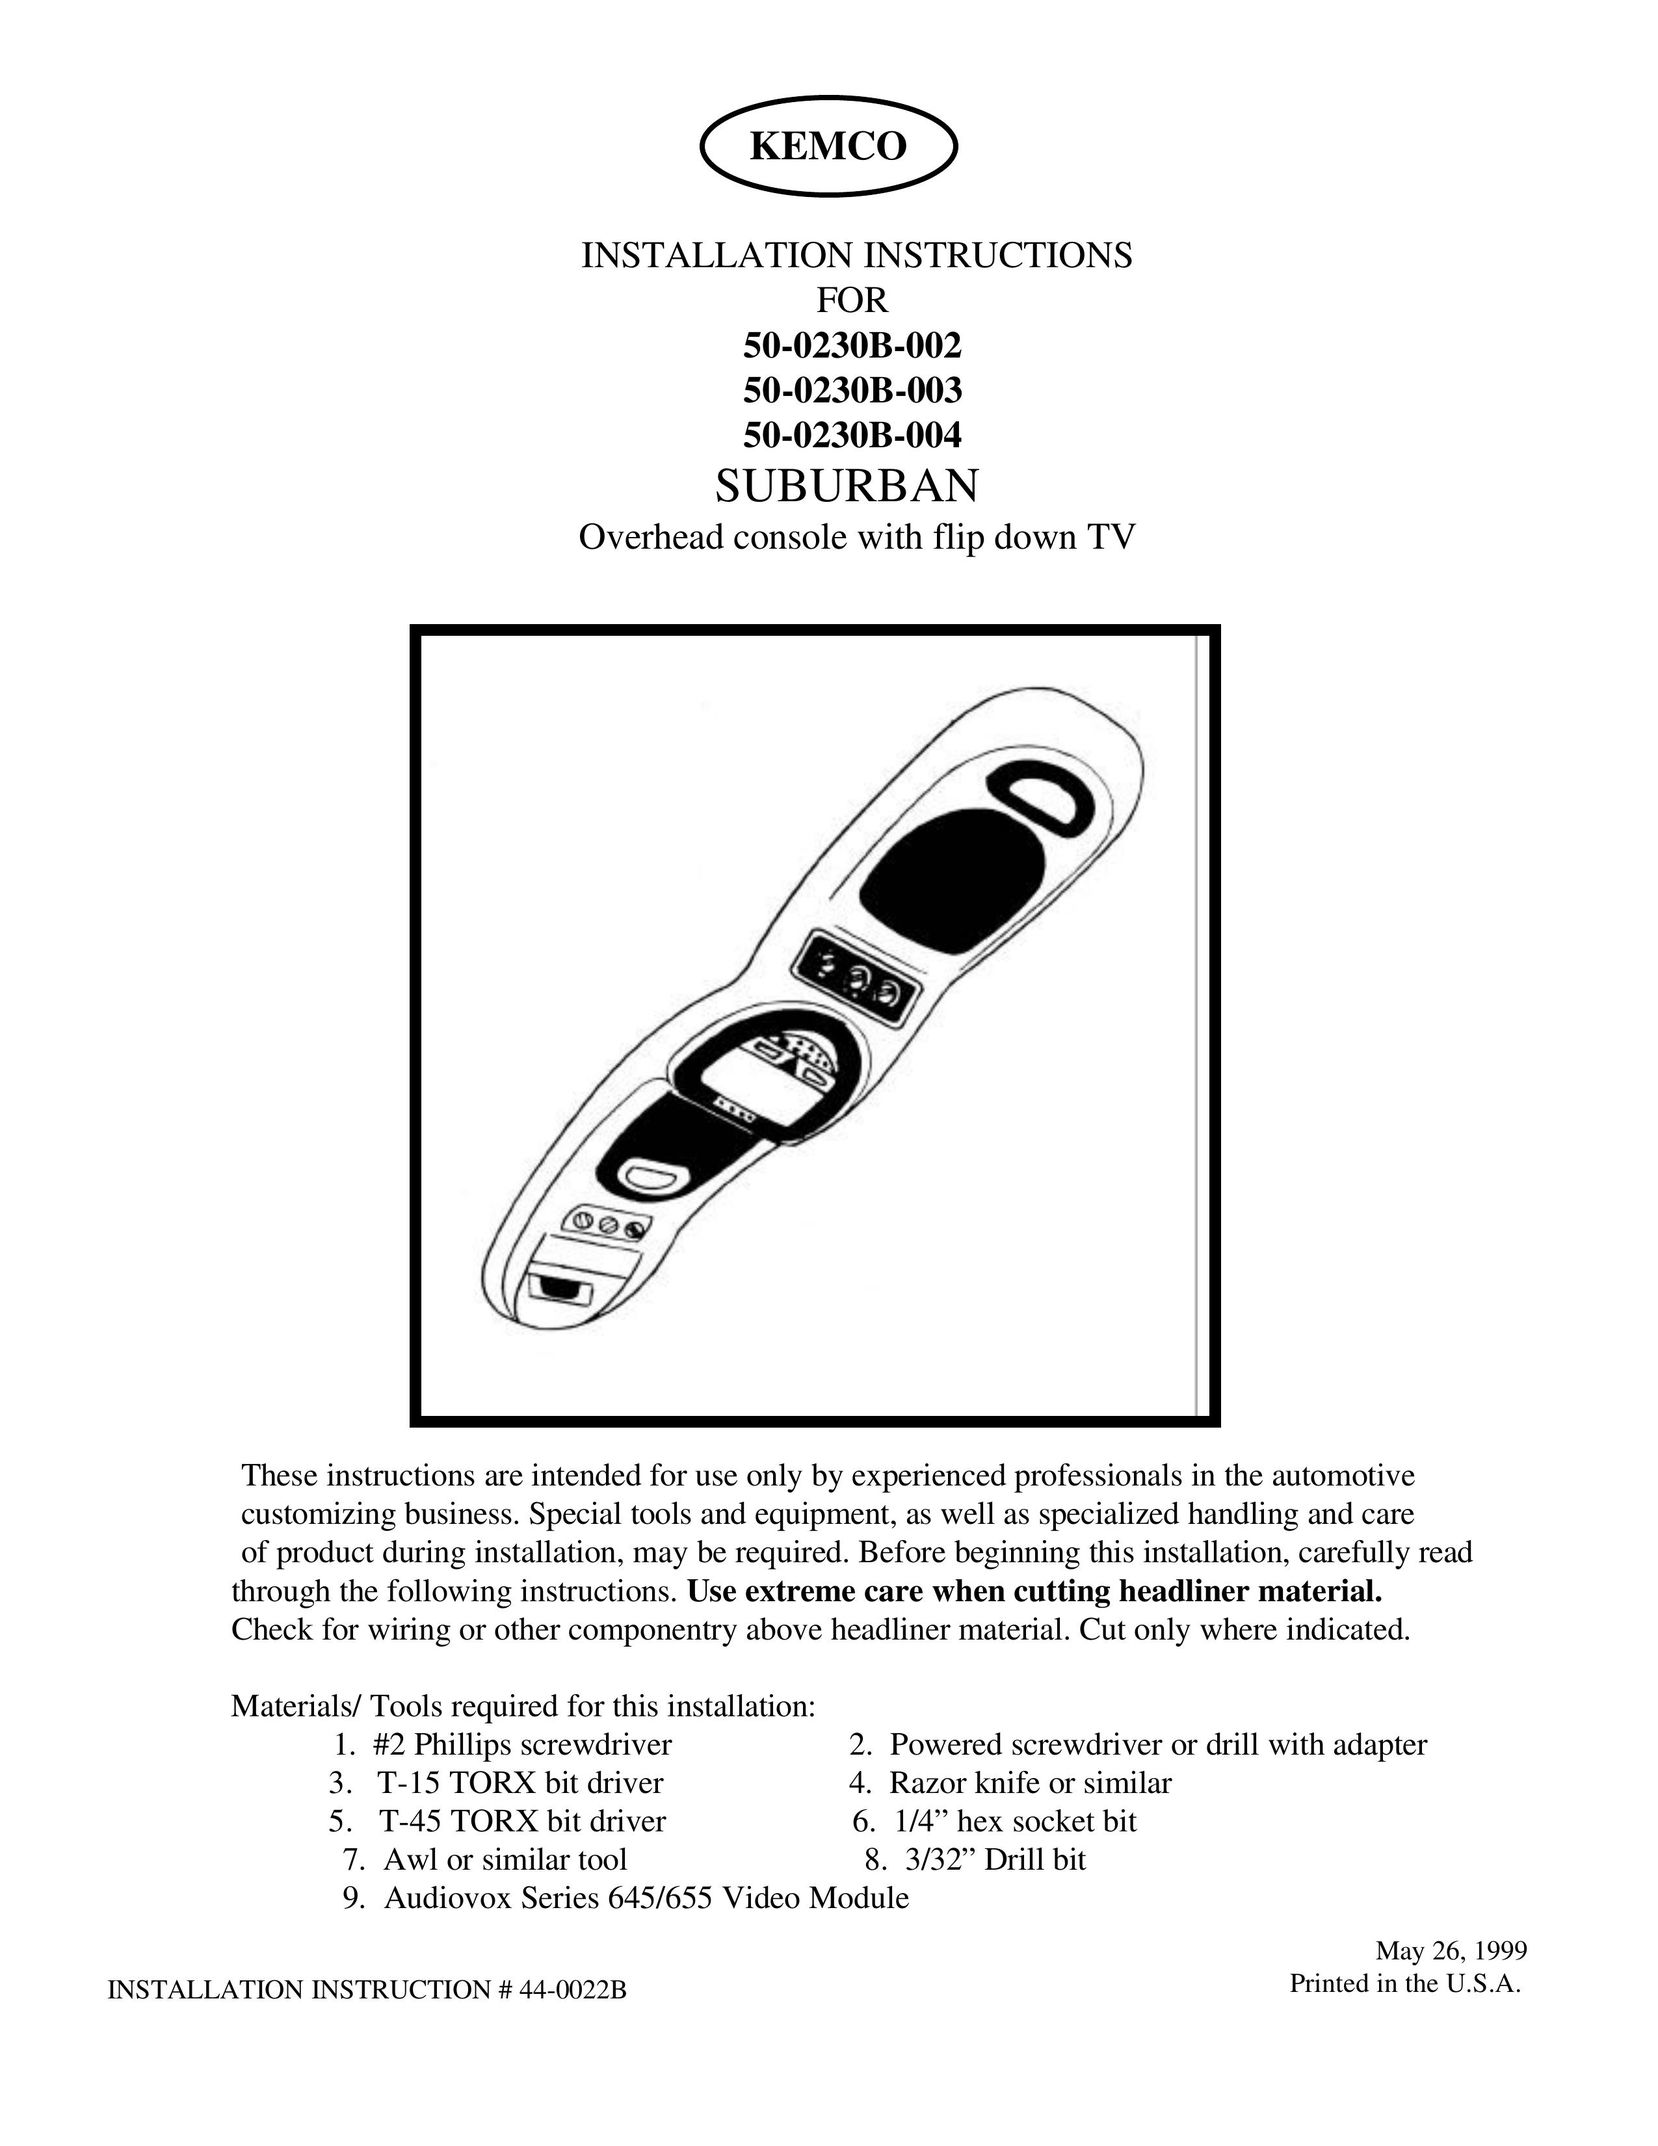 Plantronics 50-0230B-003 Car Video System User Manual